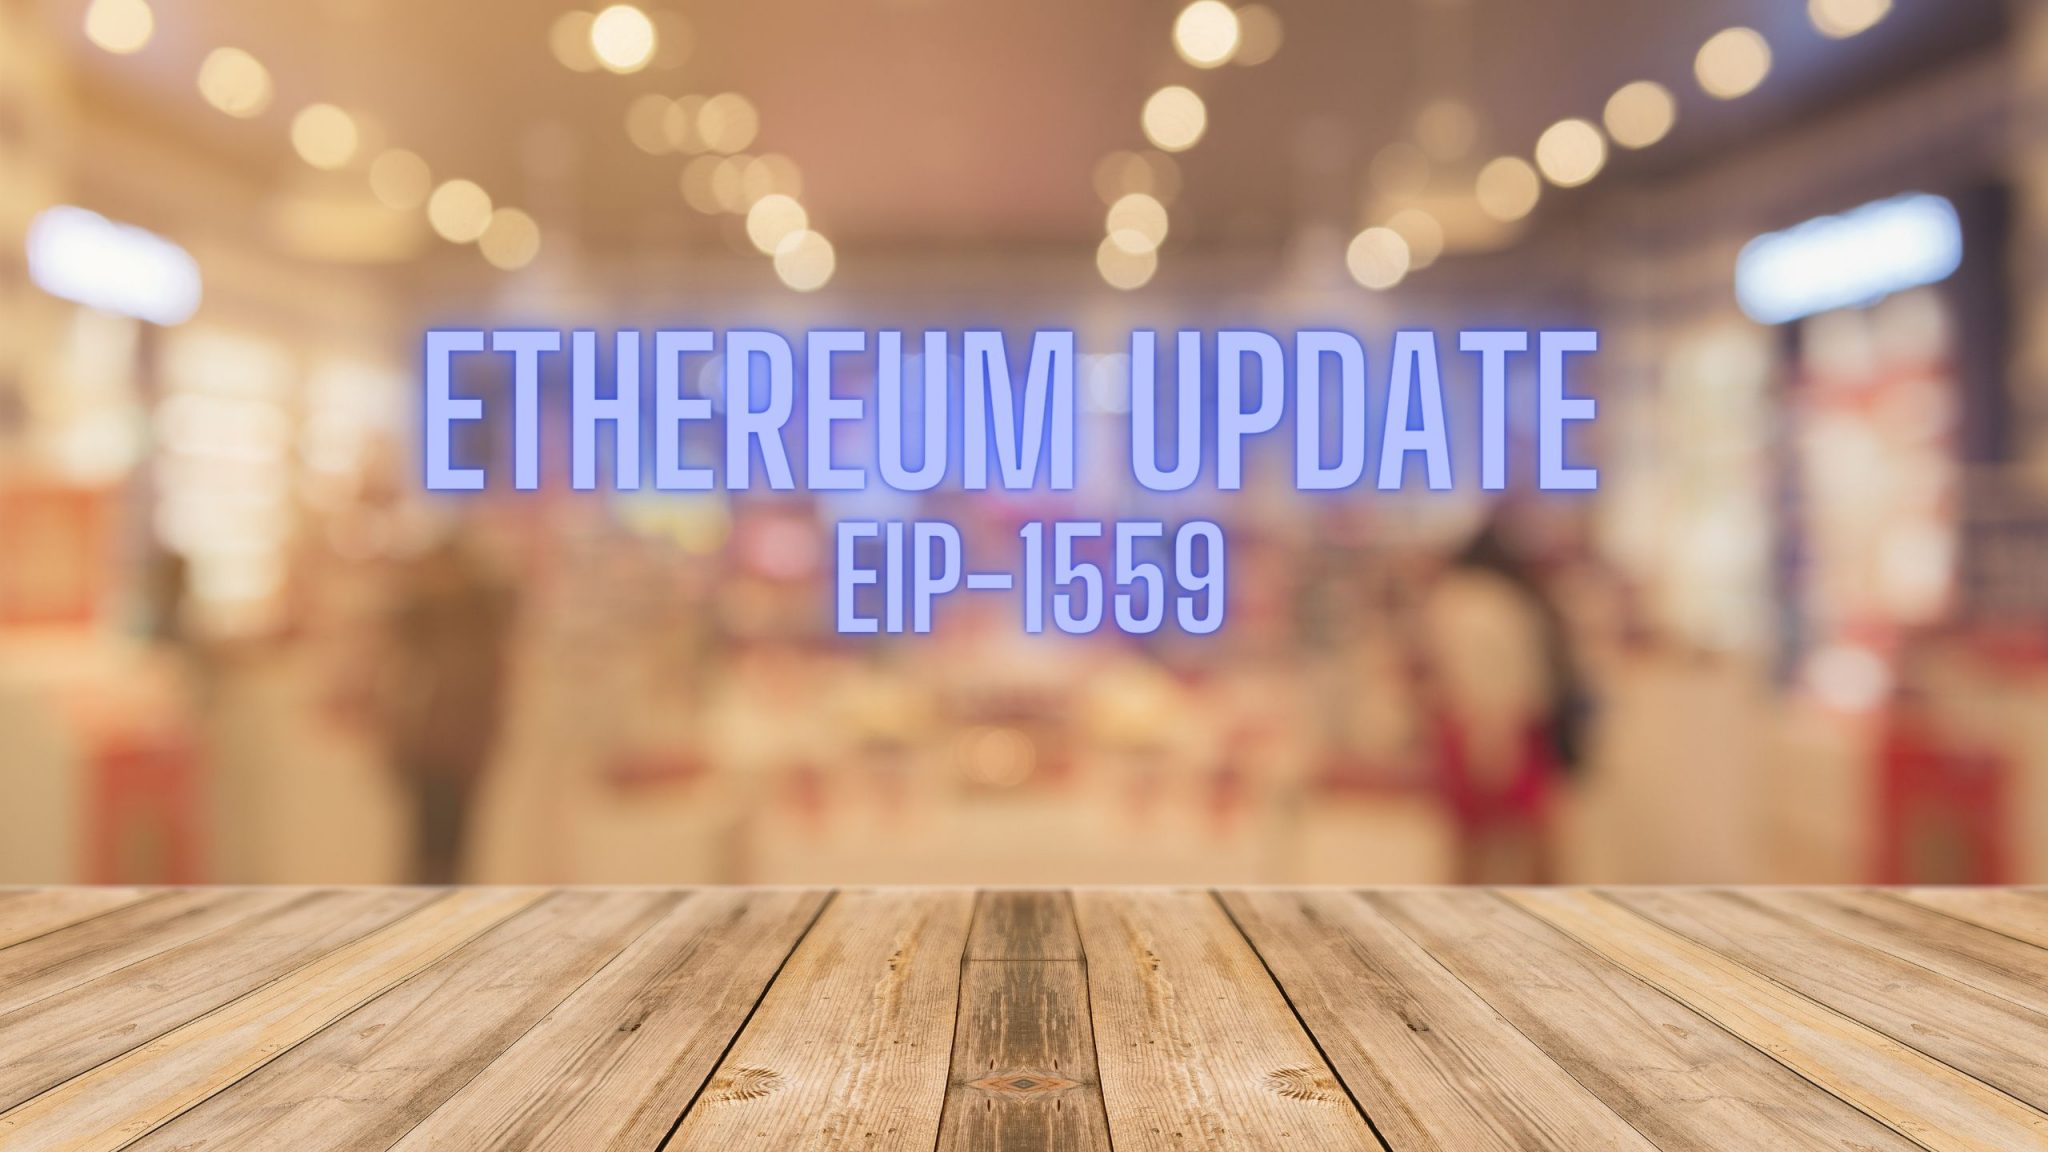 Ethereum Update EIP-1559 - DezentralizedFinance.com